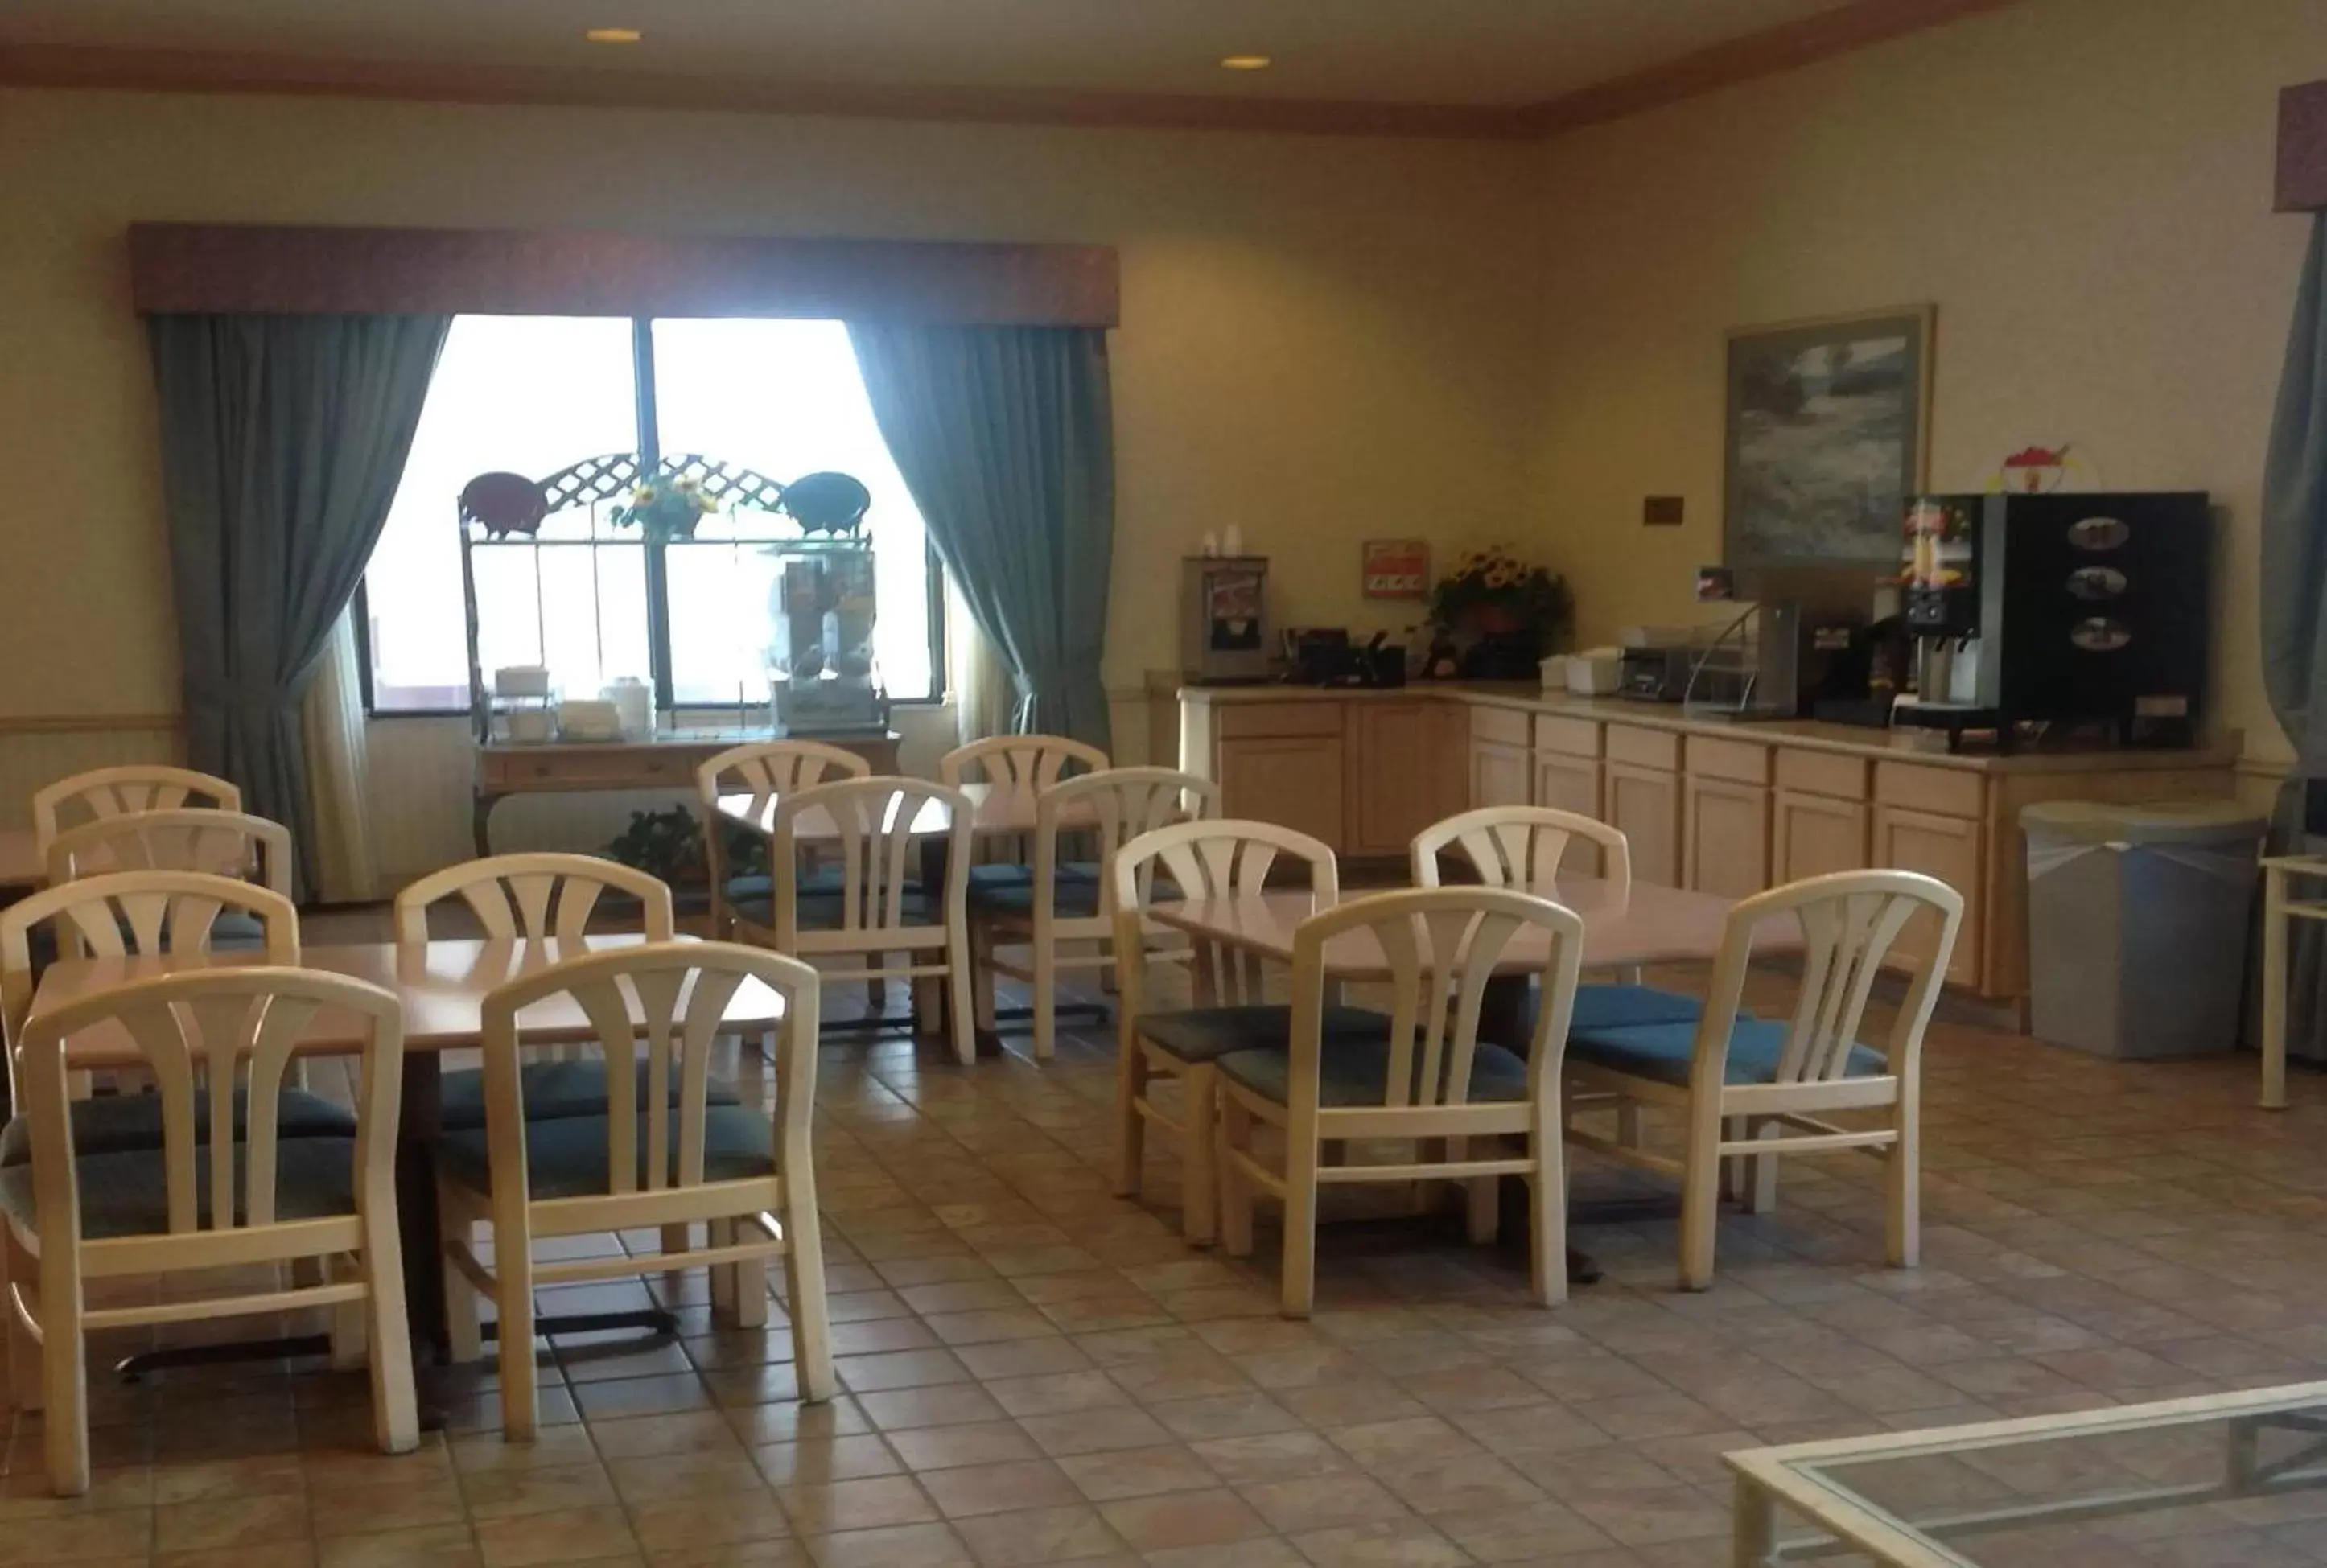 Continental breakfast, Restaurant/Places to Eat in Super 8 by Wyndham Jasper TX